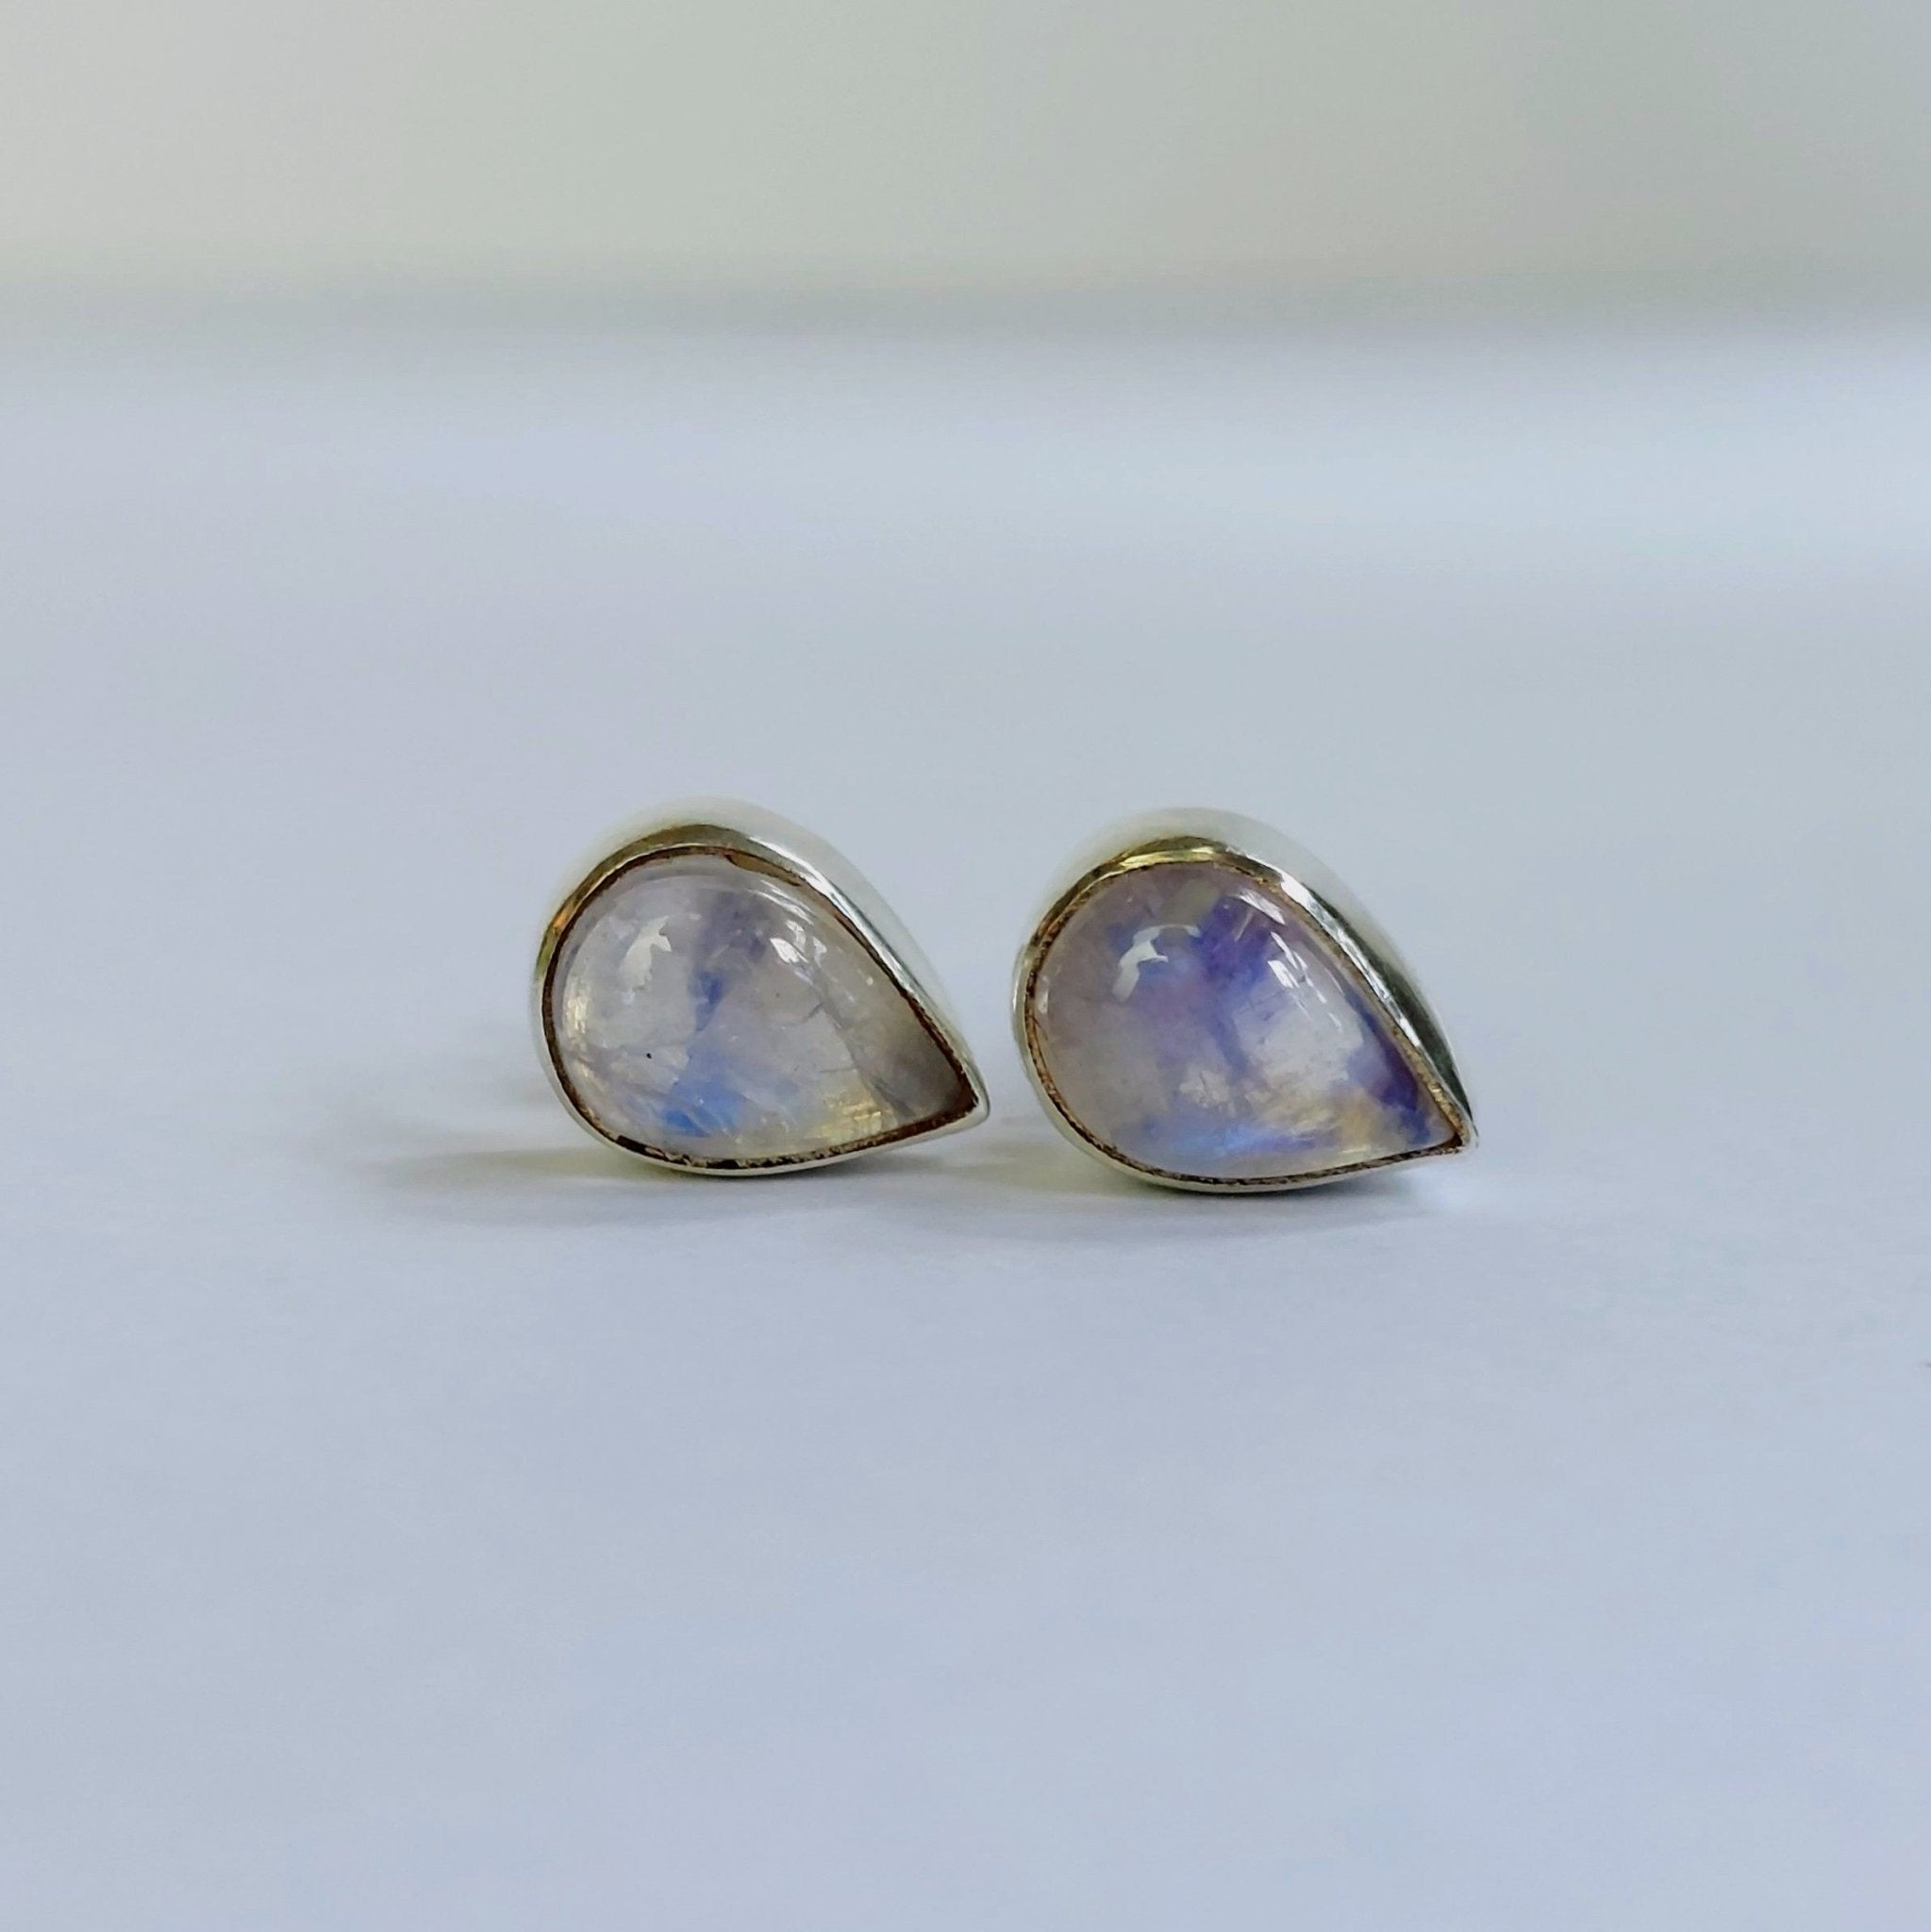 White Moonstone Teardrop Stud Earrings - The Nancy Smillie Shop - Art, Jewellery & Designer Gifts Glasgow